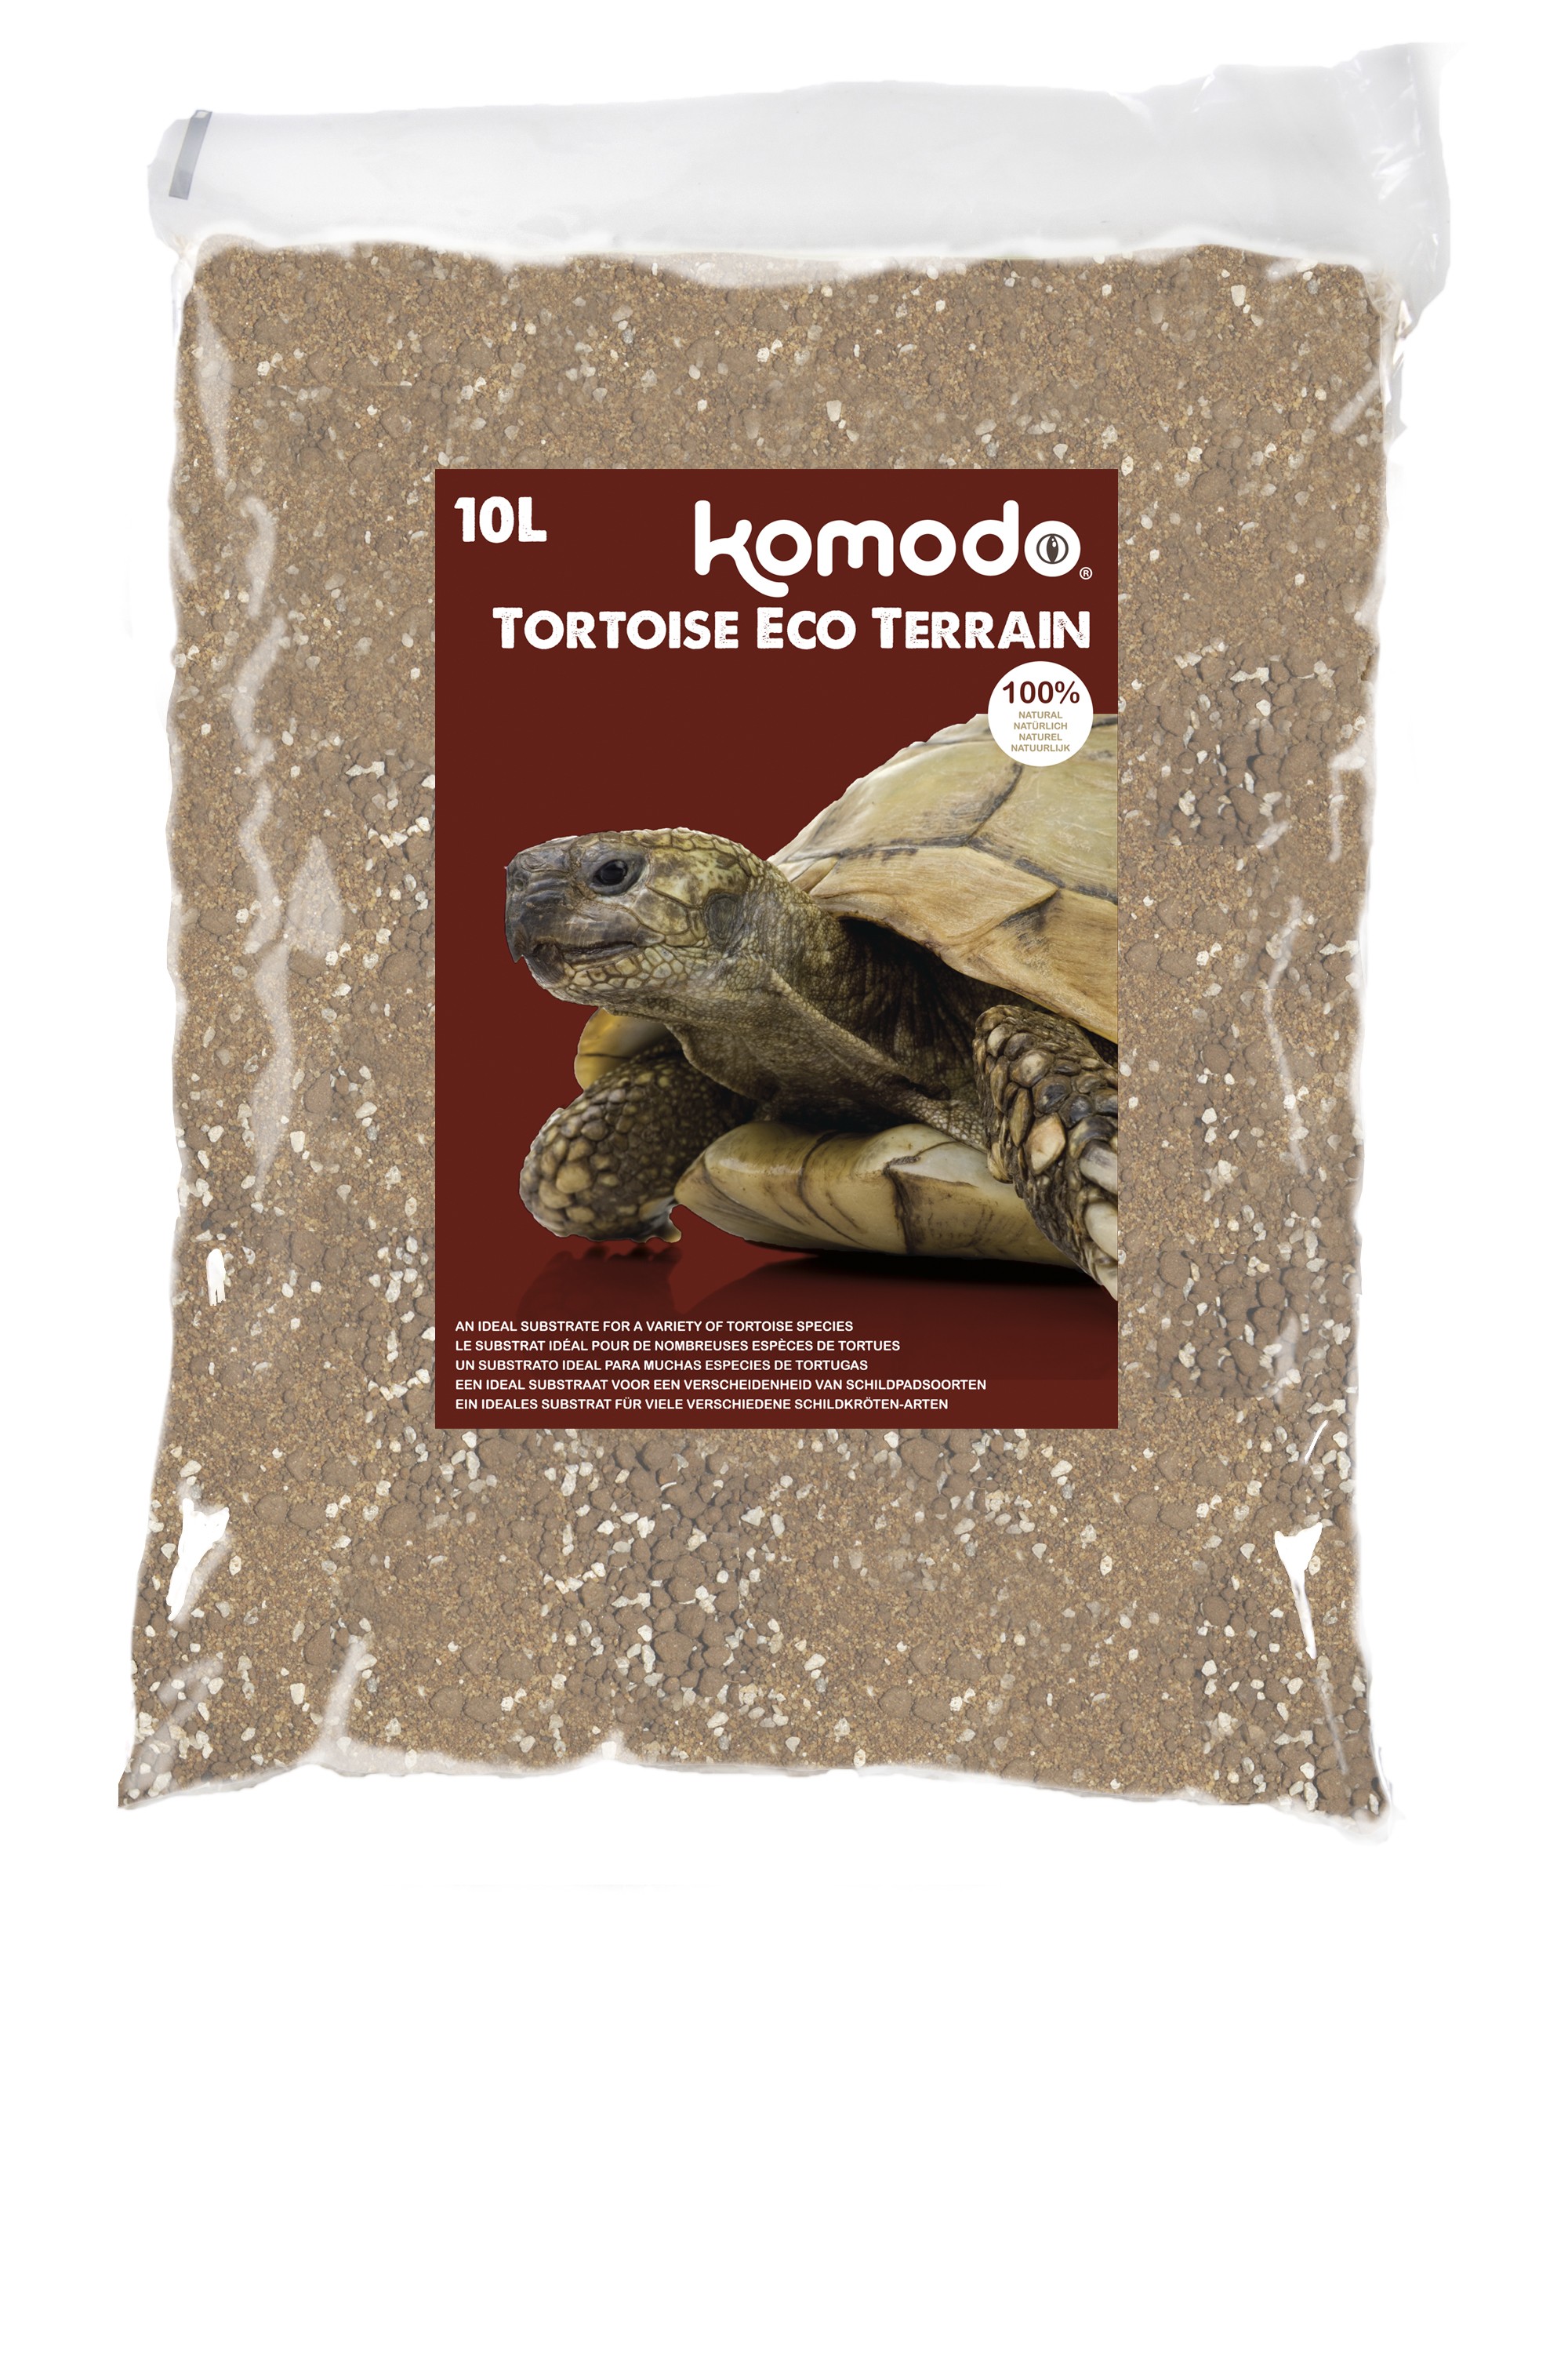 Komodo Tortoise Eco Terrain 10L 83020